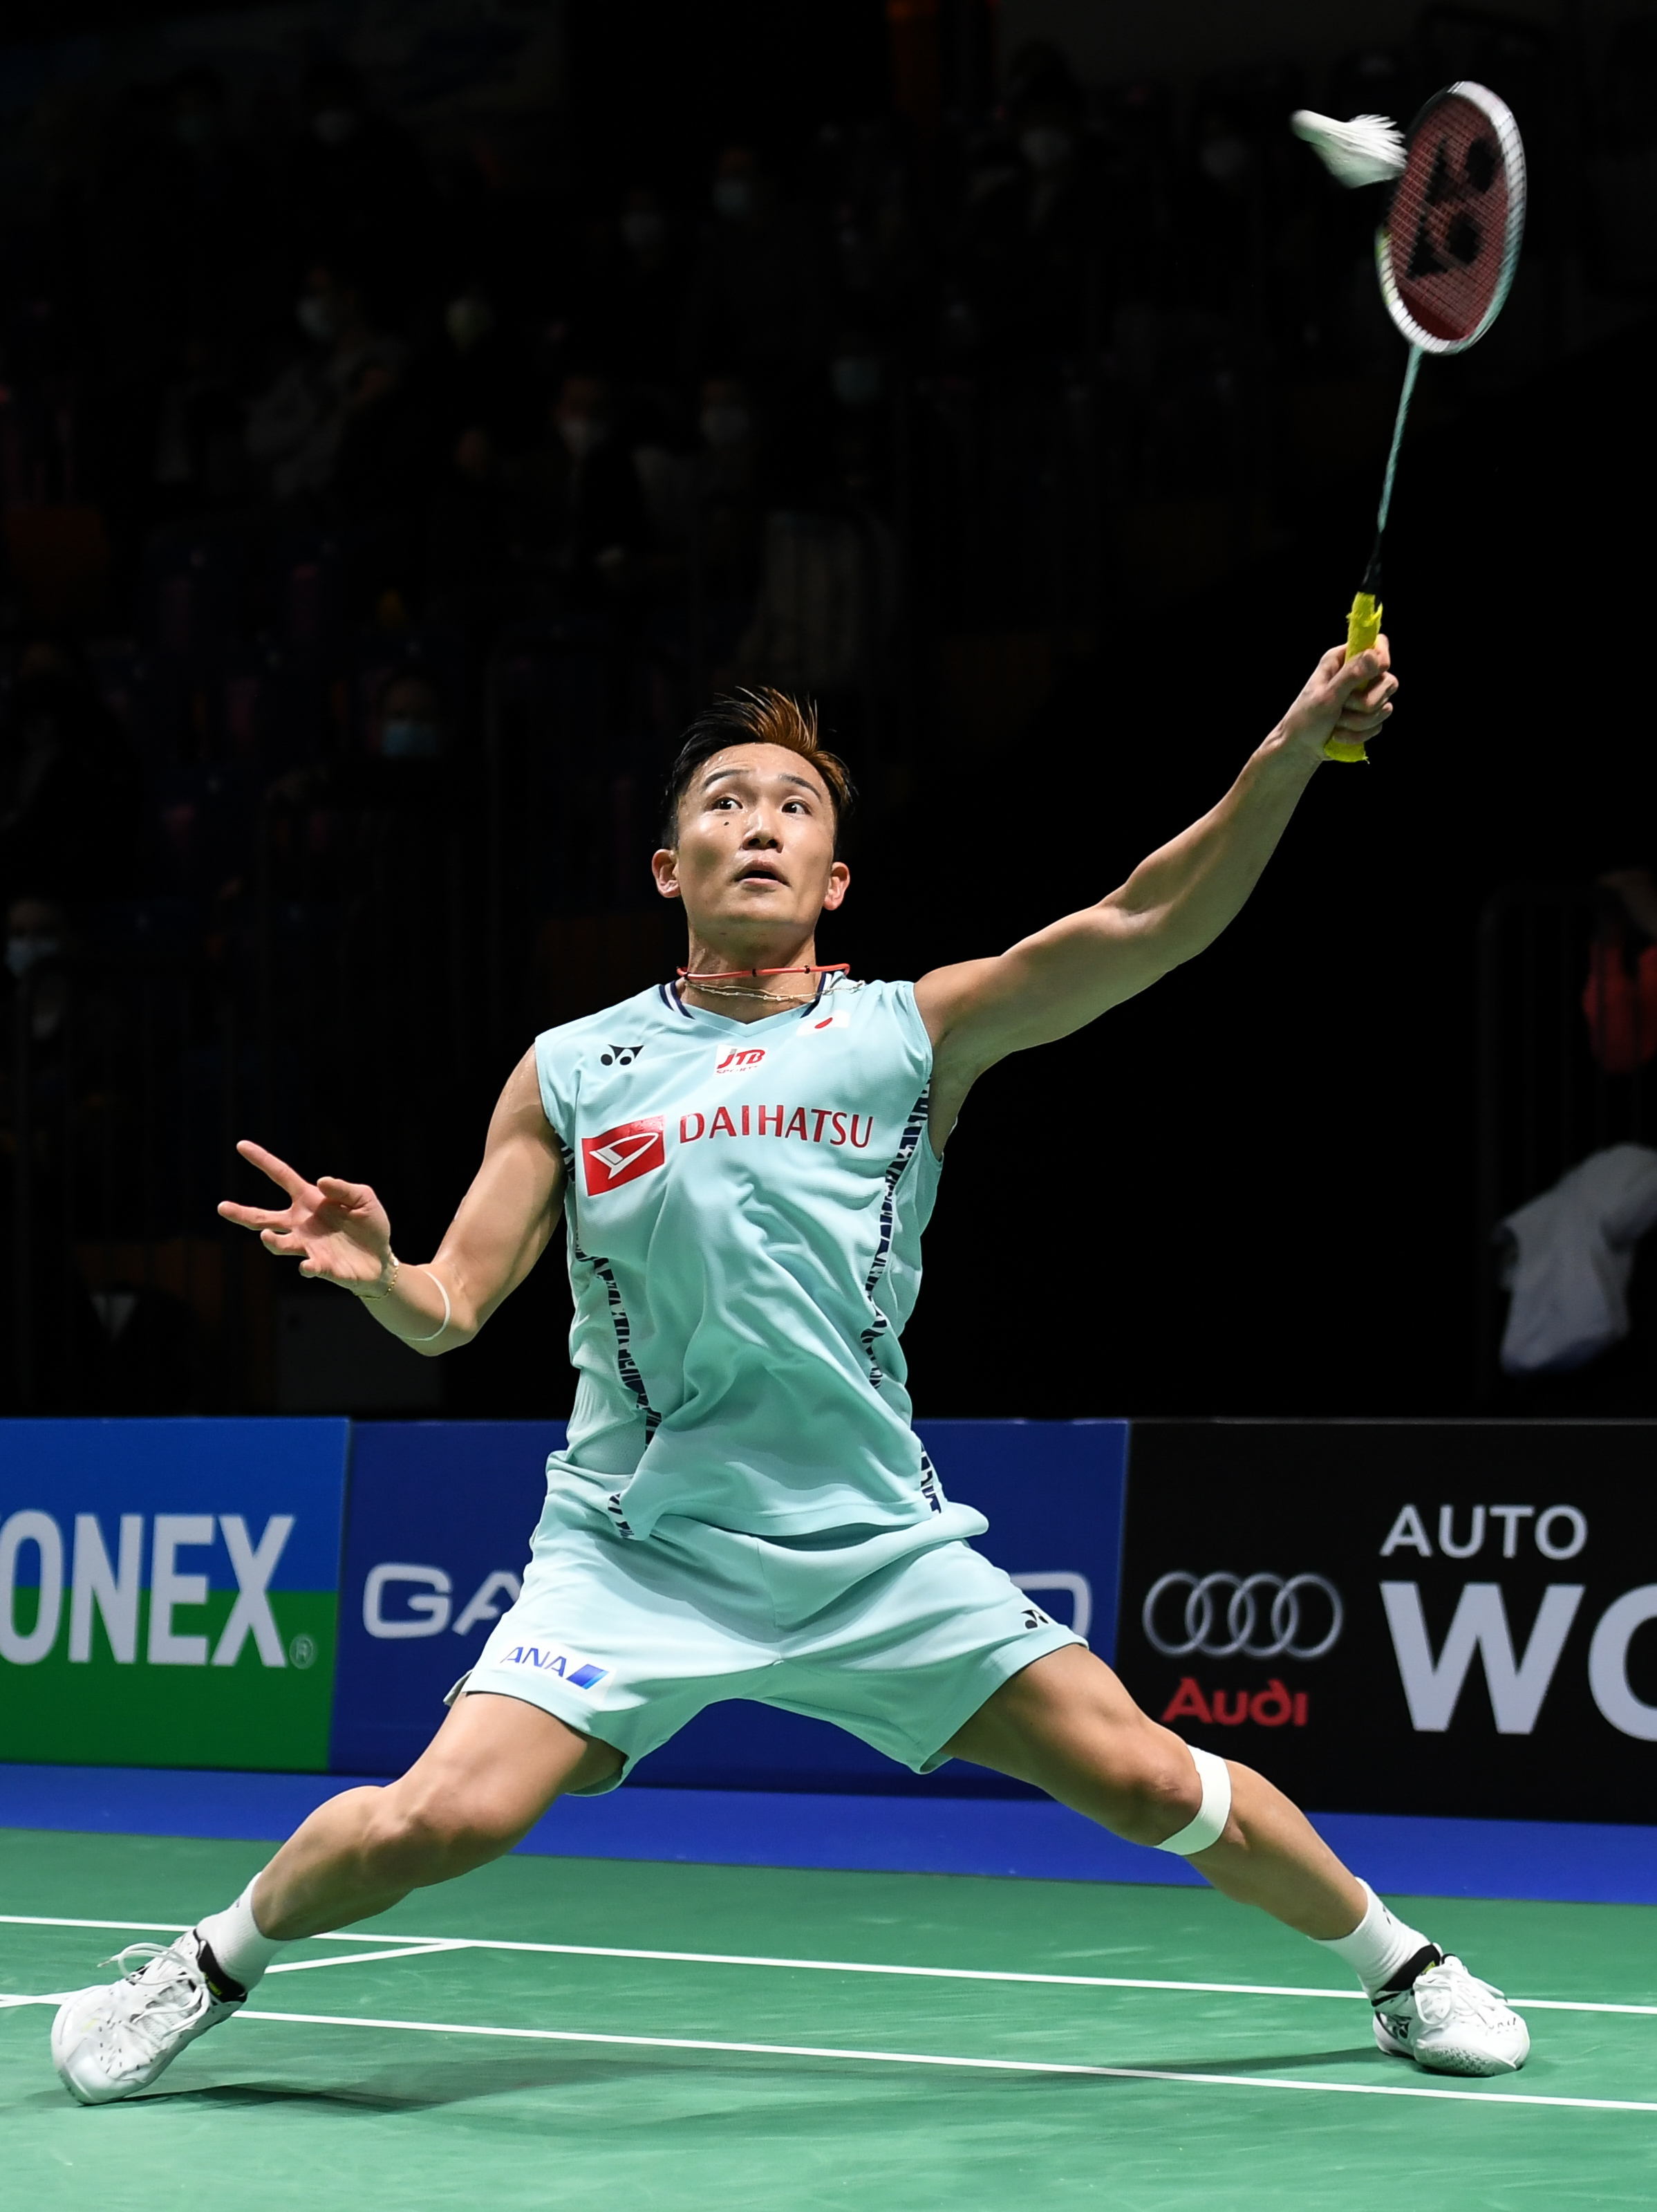 Nishimoto badminton